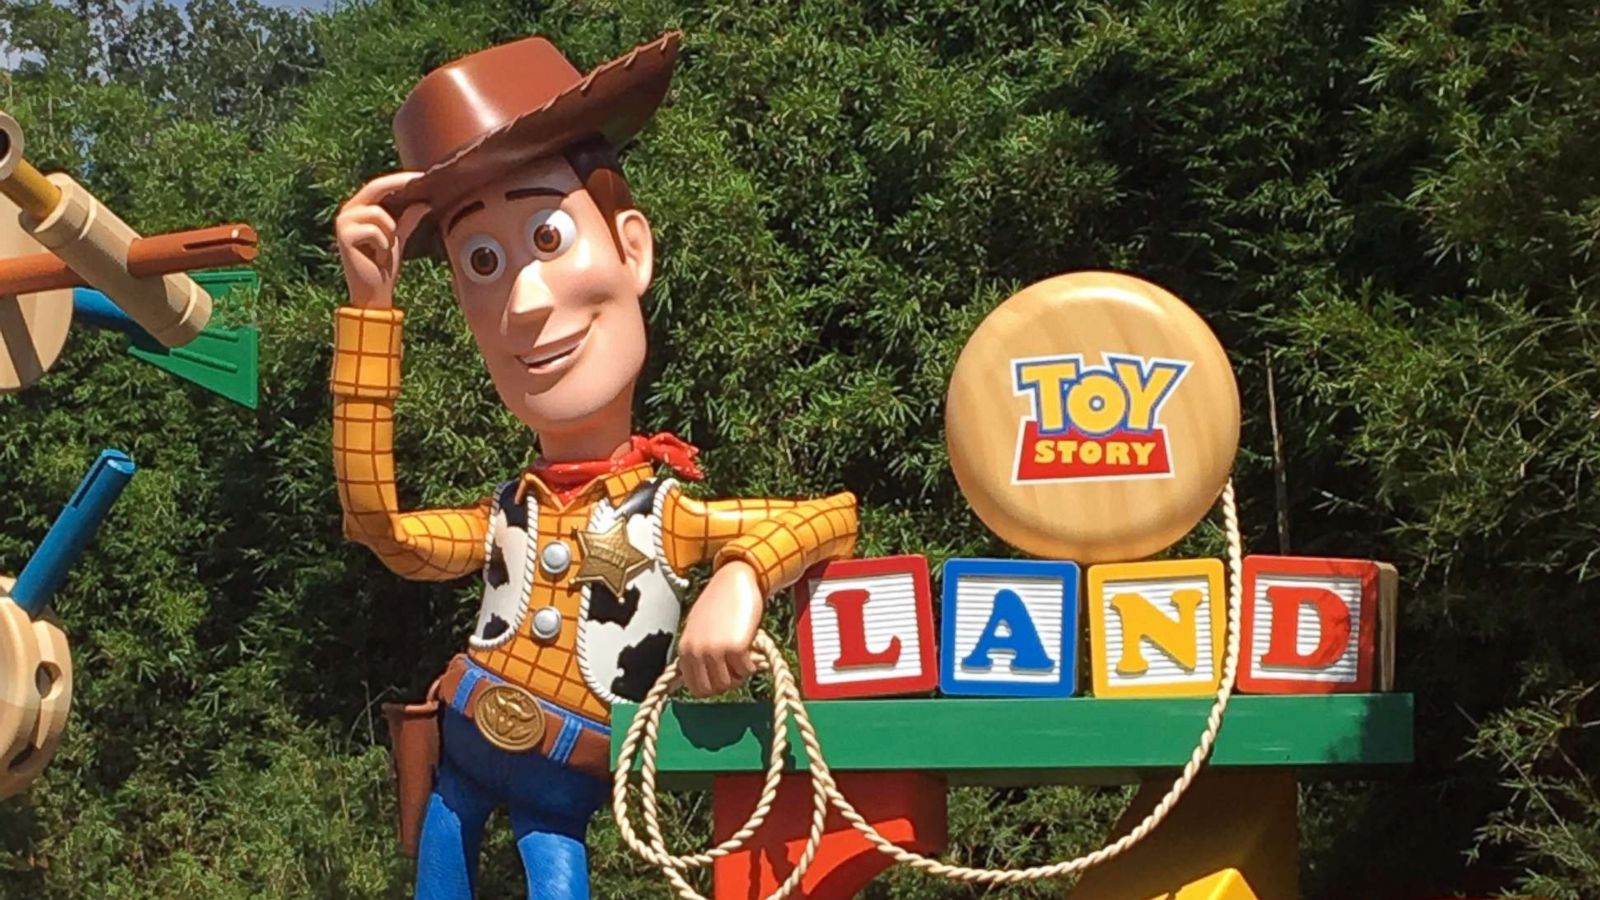 Disney's Toy Story Original 1995 Woody & Buzz Lunchbox, With Army